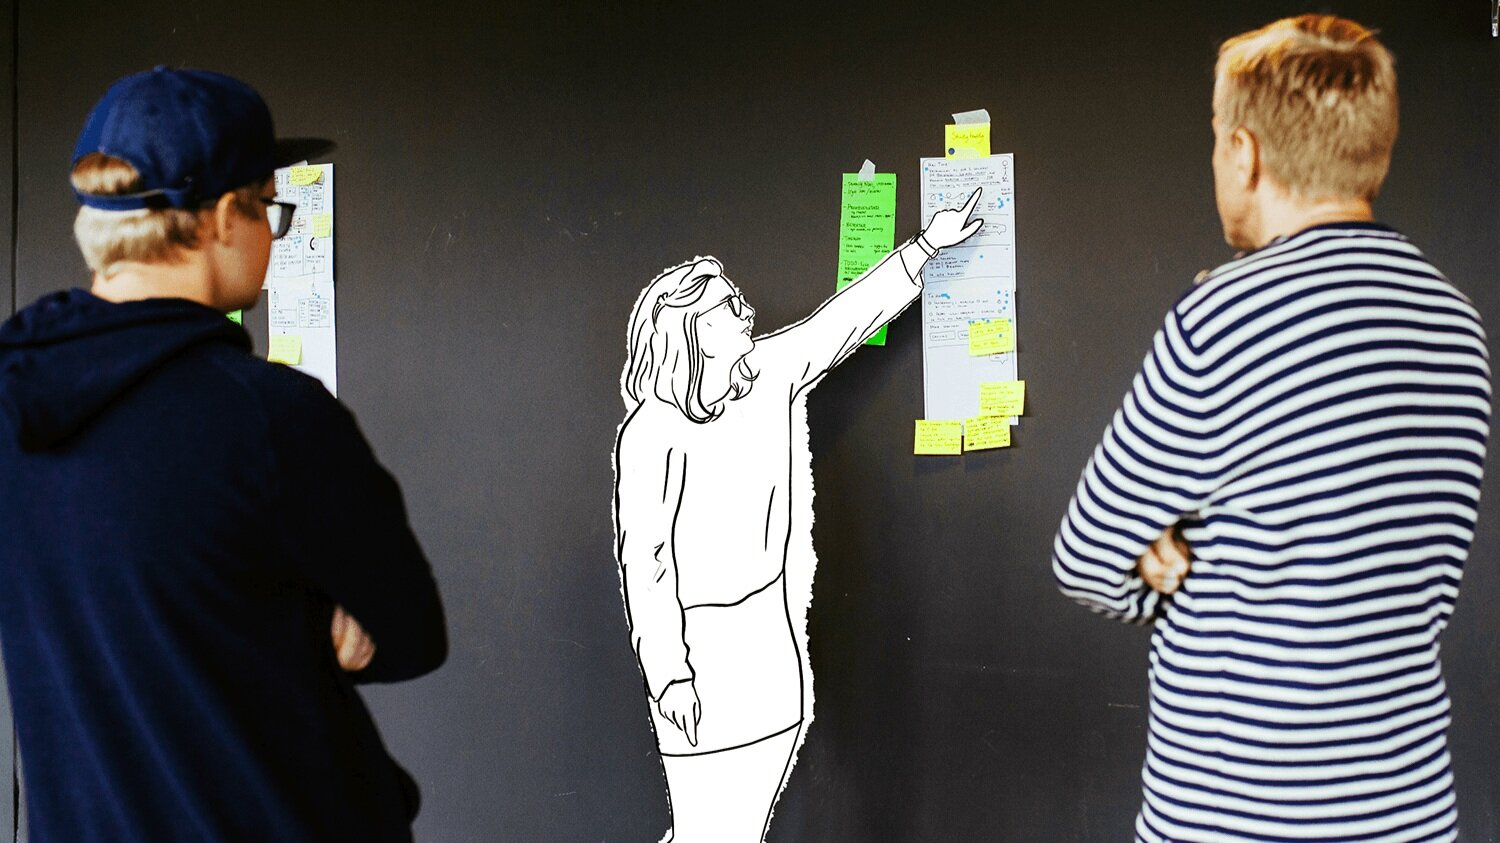 Fra designsprinten: en deltager viser fram konseptskissen sin, som henger på veggen, mens de andre deltagerne lytter og observerer.